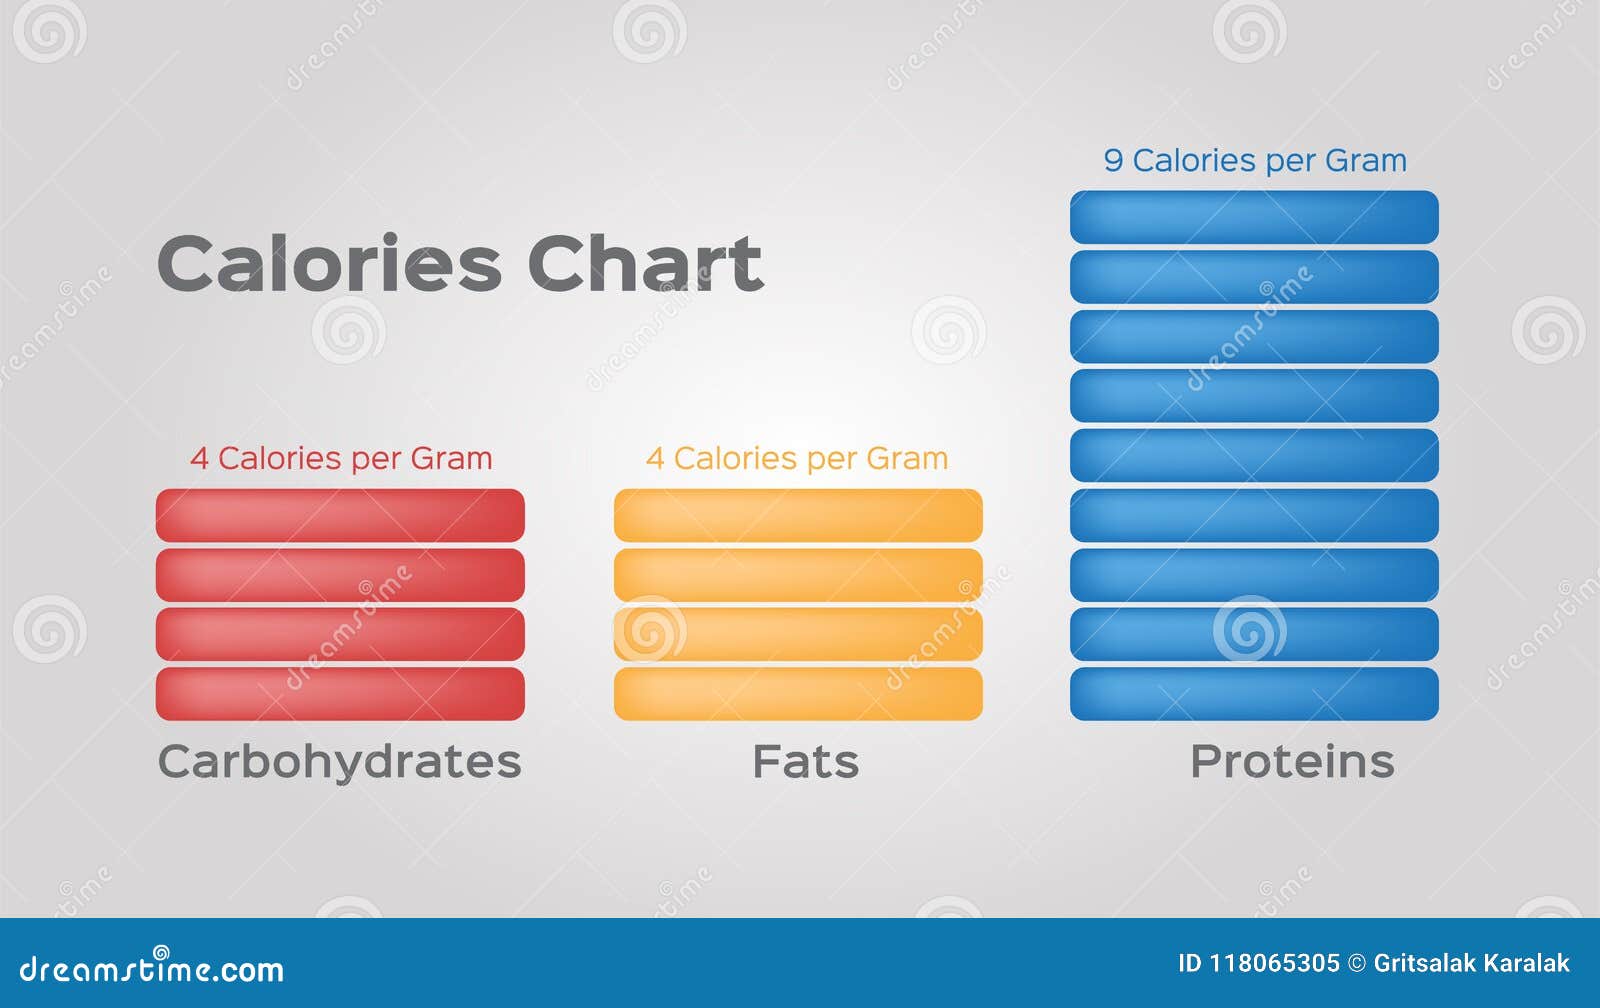 Protein Per Calorie Chart